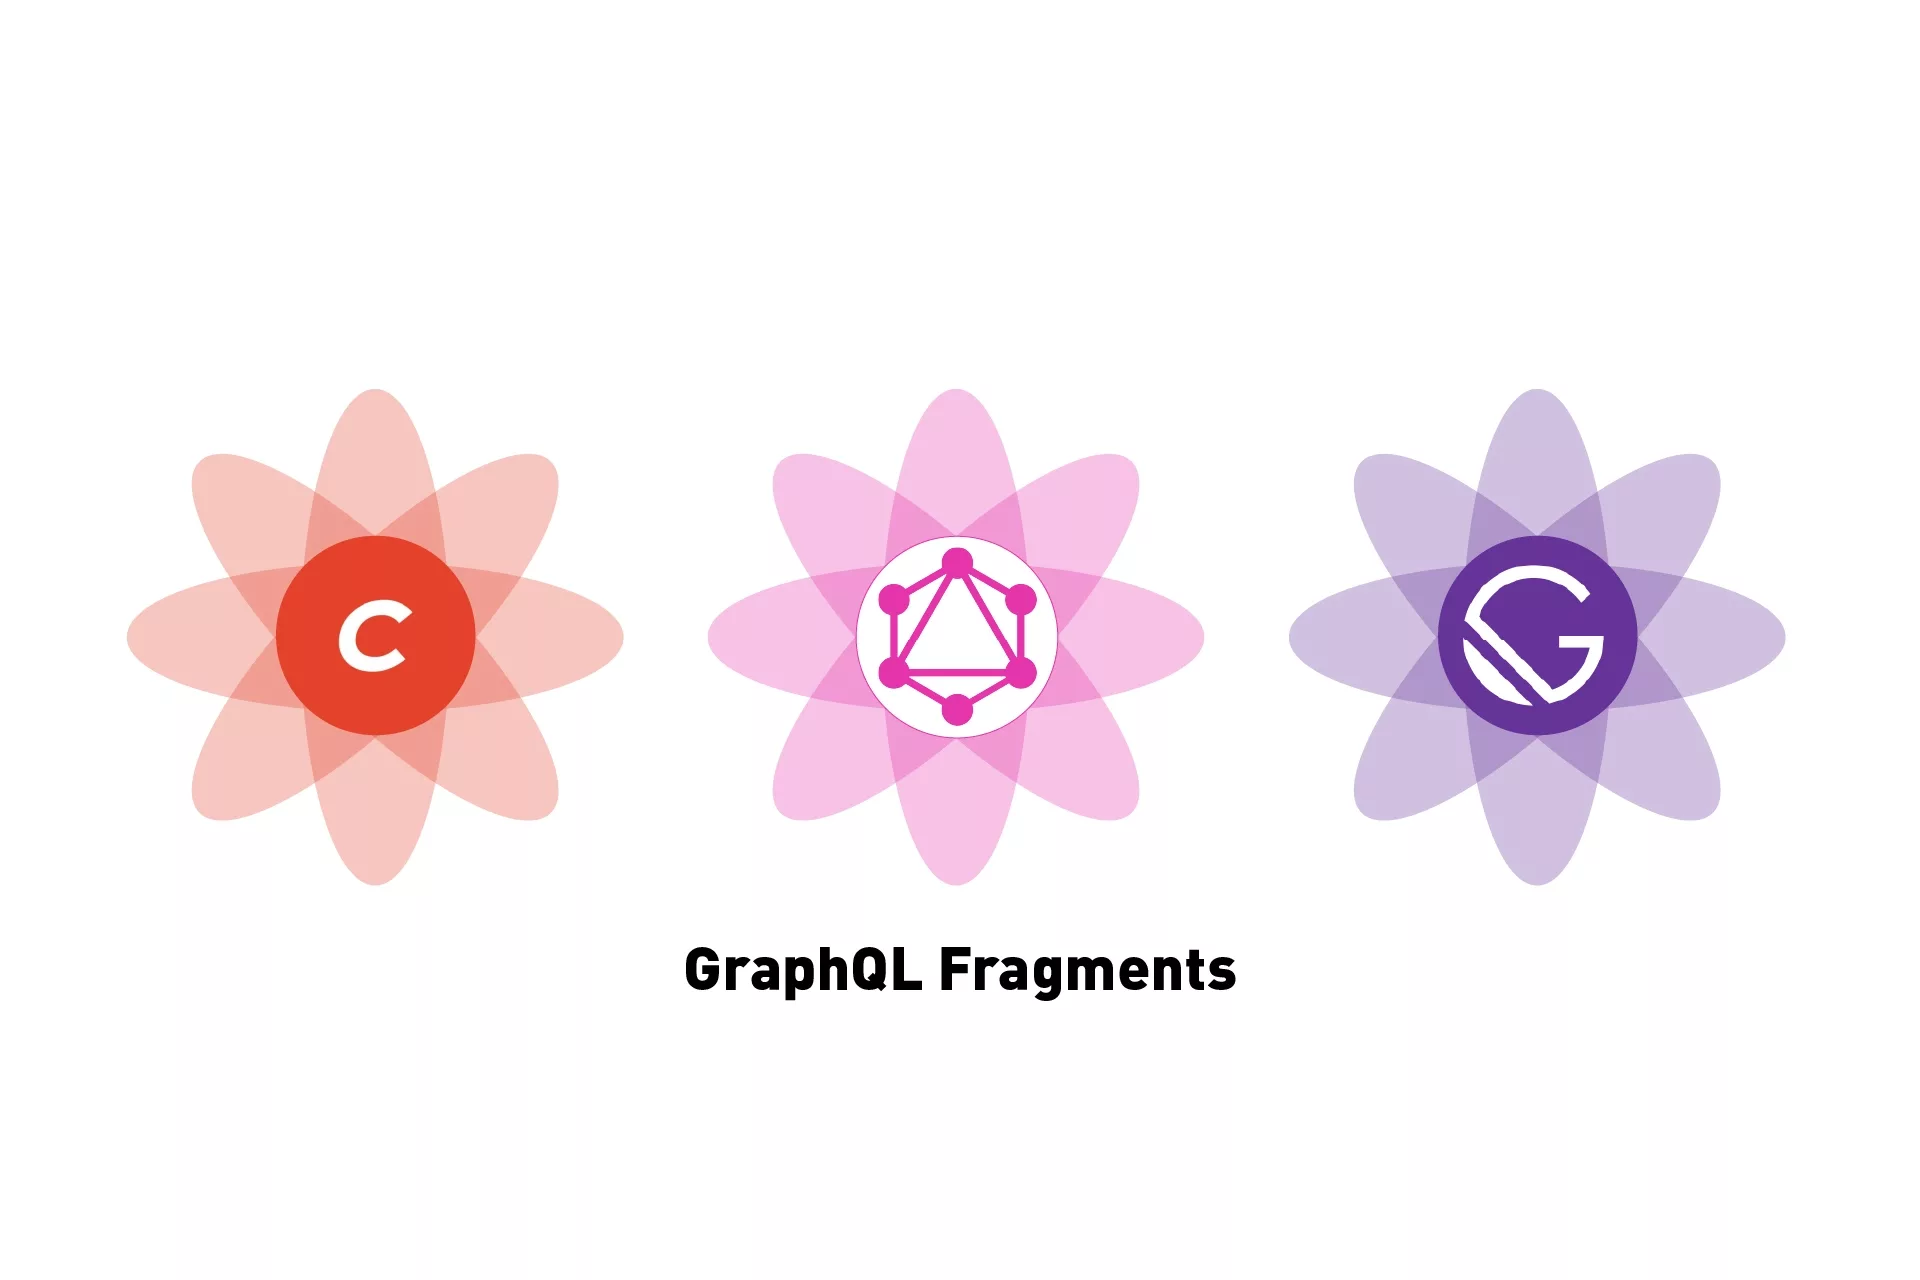 Three flowers that represent Craft CMS, GraphQL & GatsbyJS side by side, beneath them sits the text 'GraphQL Fragments'.